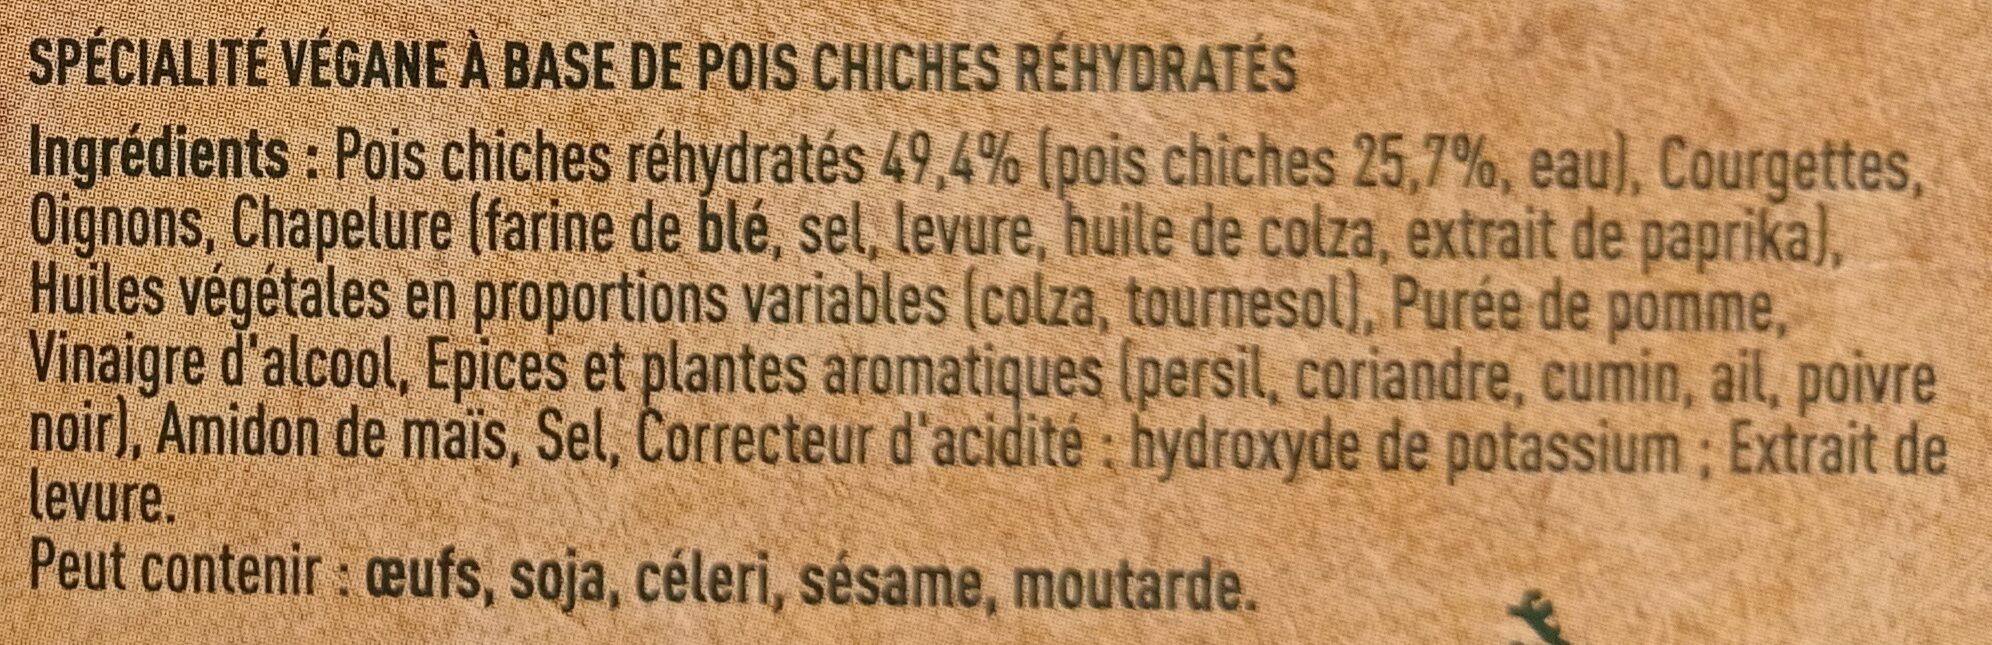 Falafels Pois chiches - Ingredients - fr